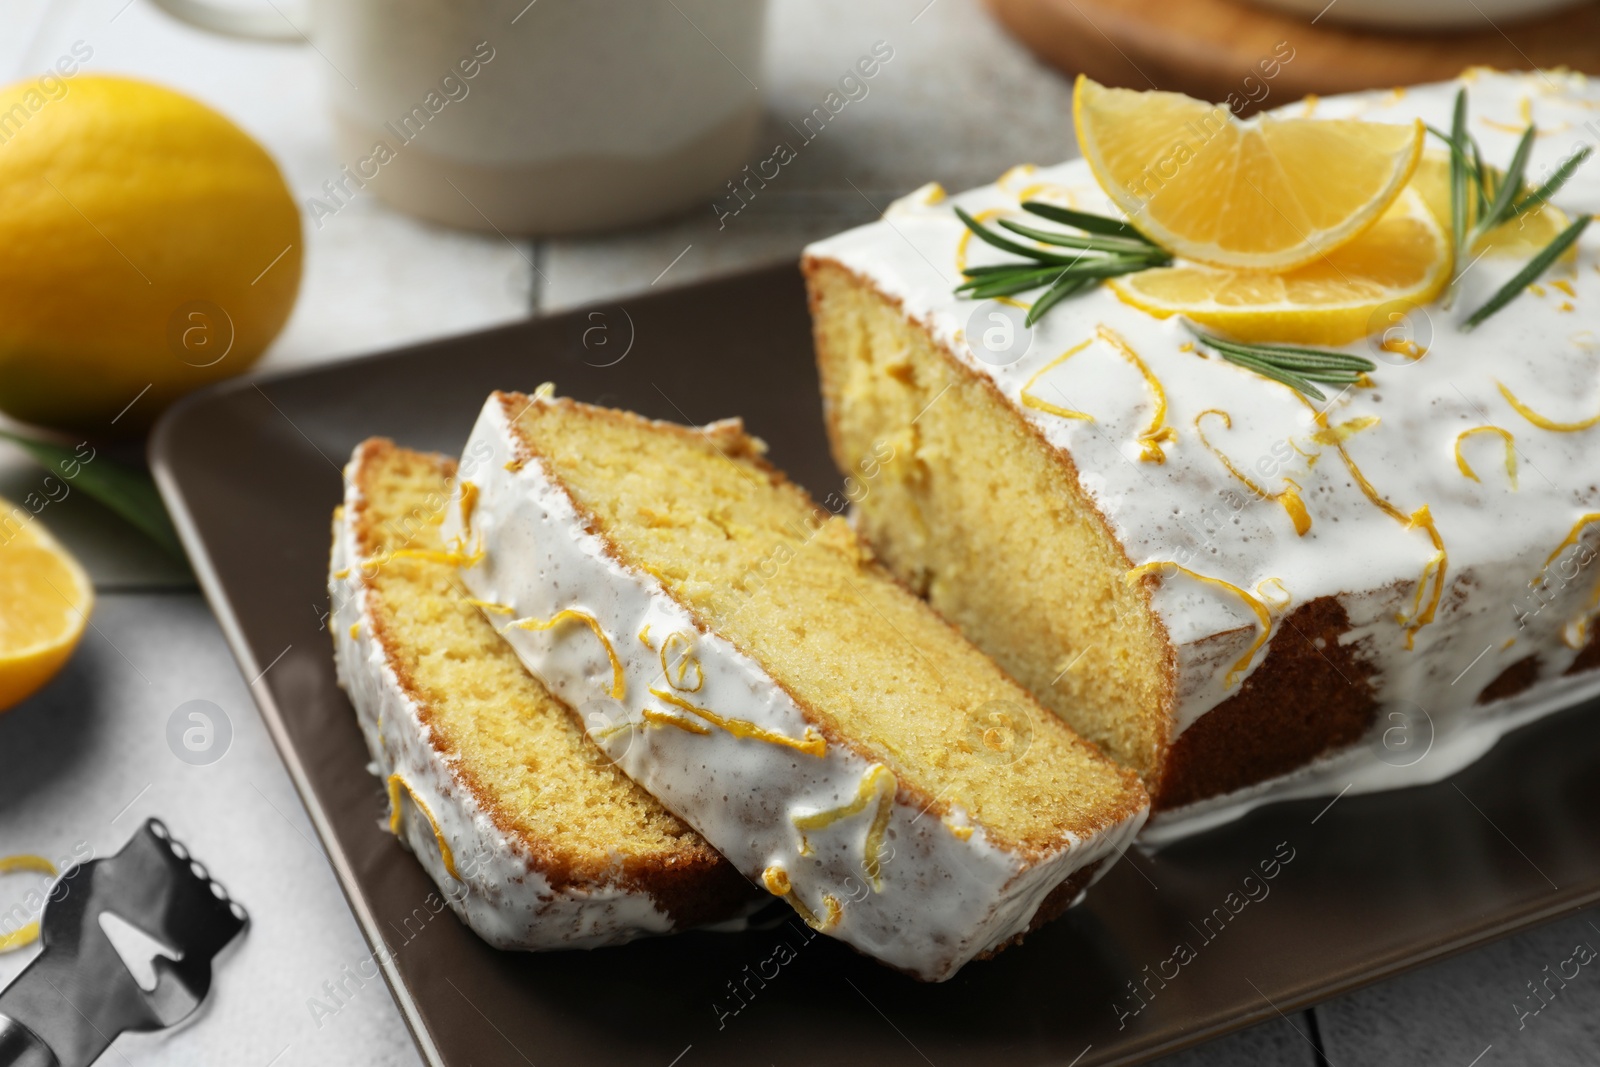 Photo of Tasty lemon cake with glaze and citrus fruits on table, closeup